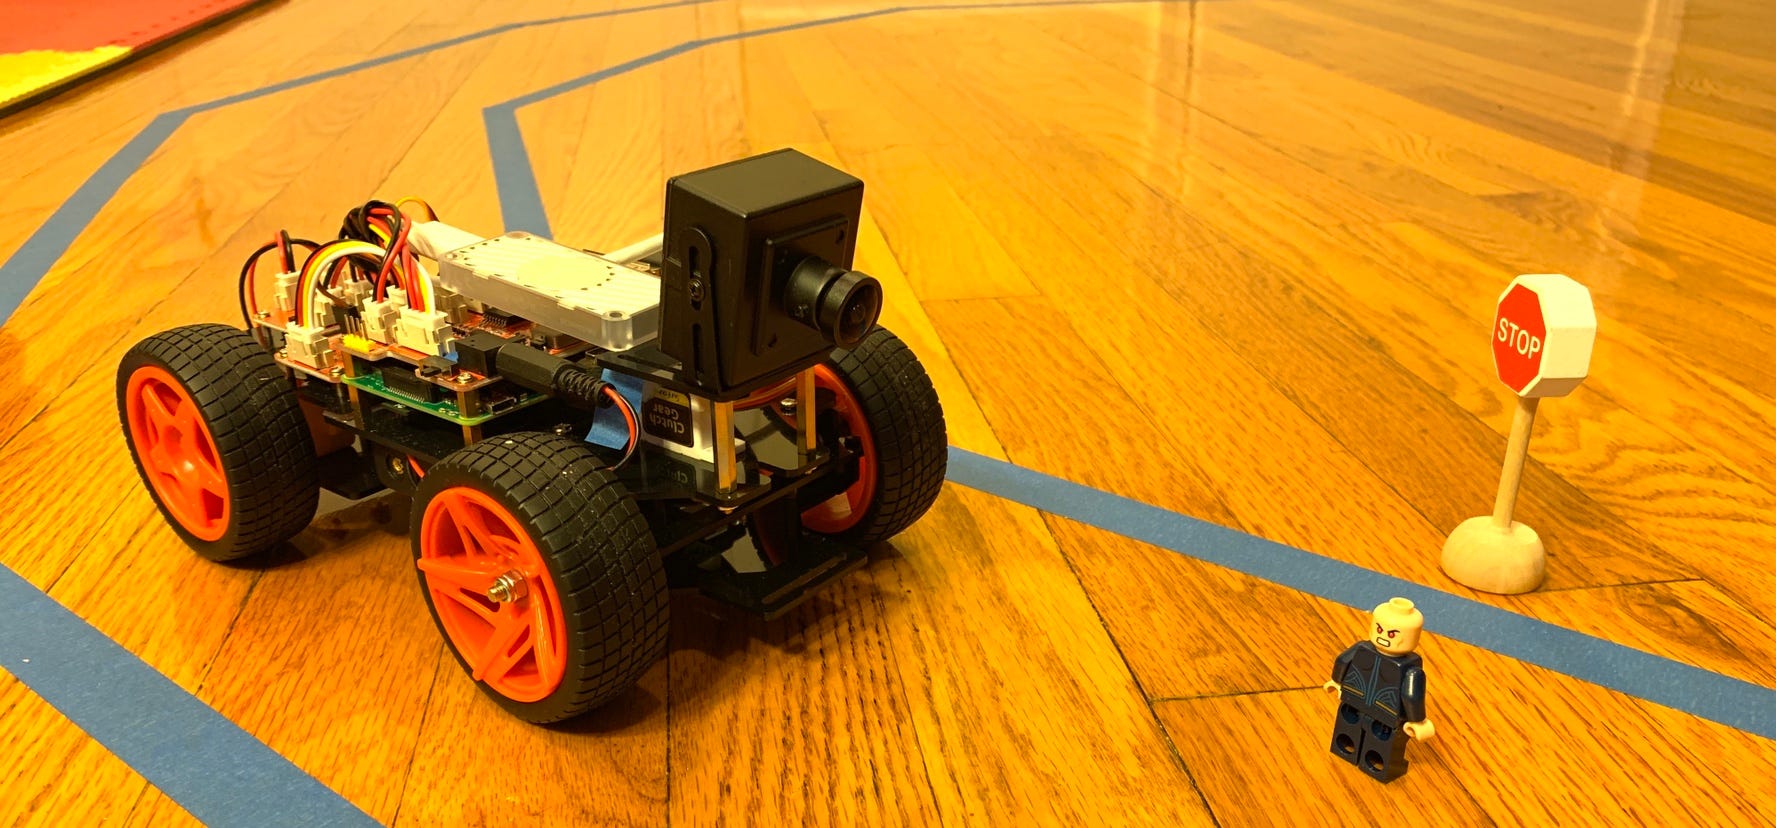 Deep Learning, Self Driving Robotic Car 